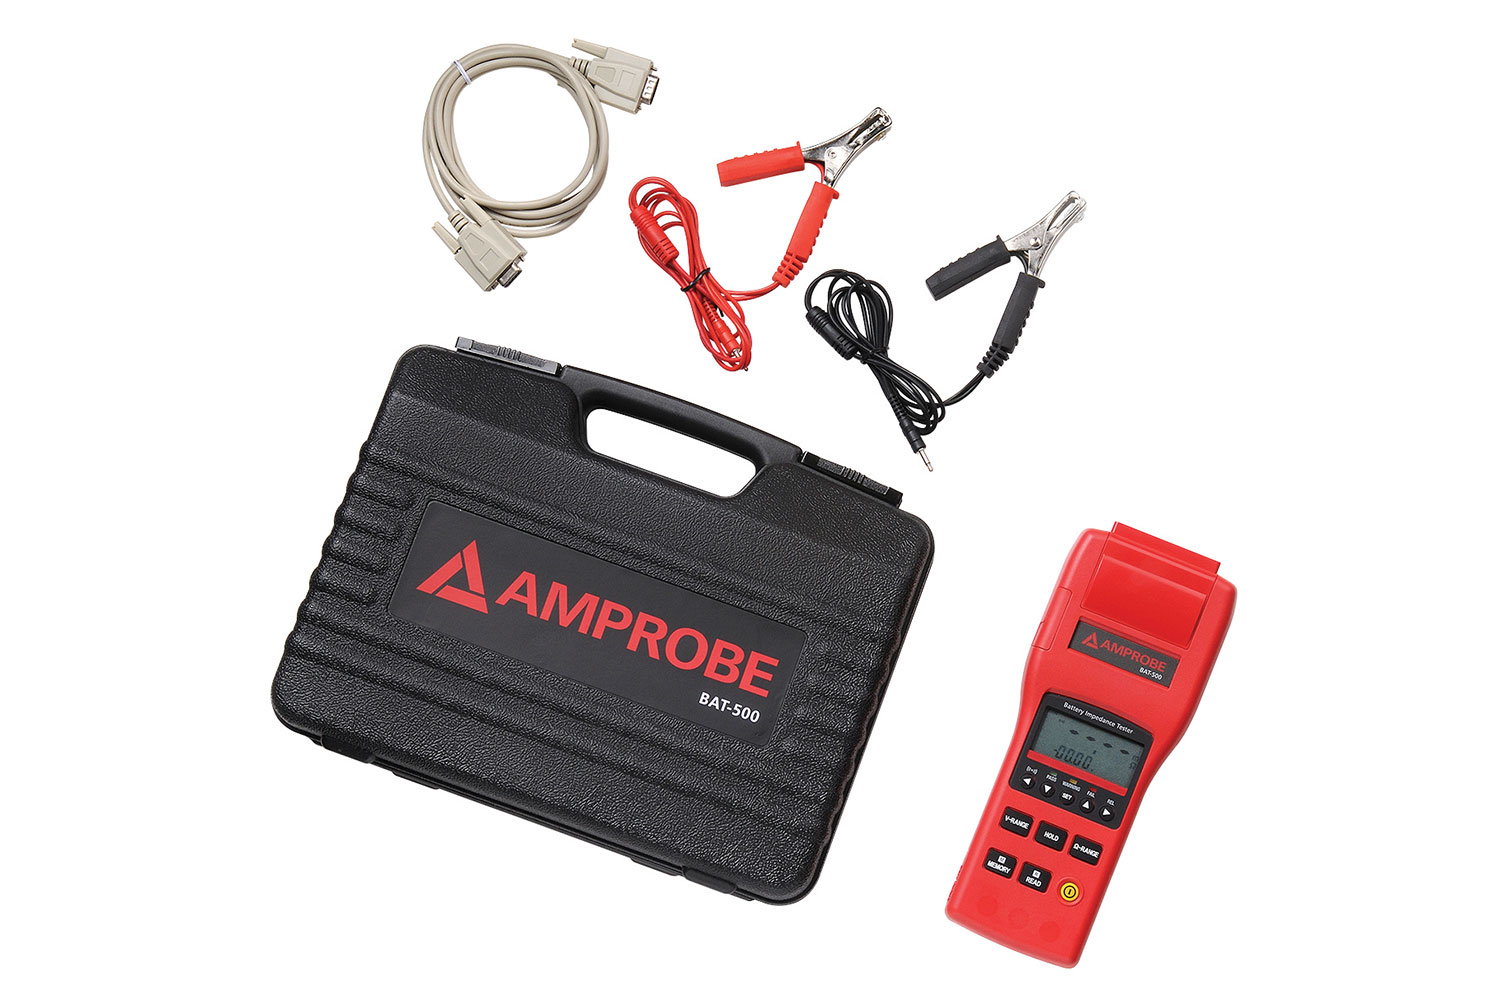 200 бат. Up тестер запчасть. Amprobe IRDA-USB-Cable Insulation Tester Cable, for use with Amprobe Testers, кабель. Ремонт прибор bat—500.